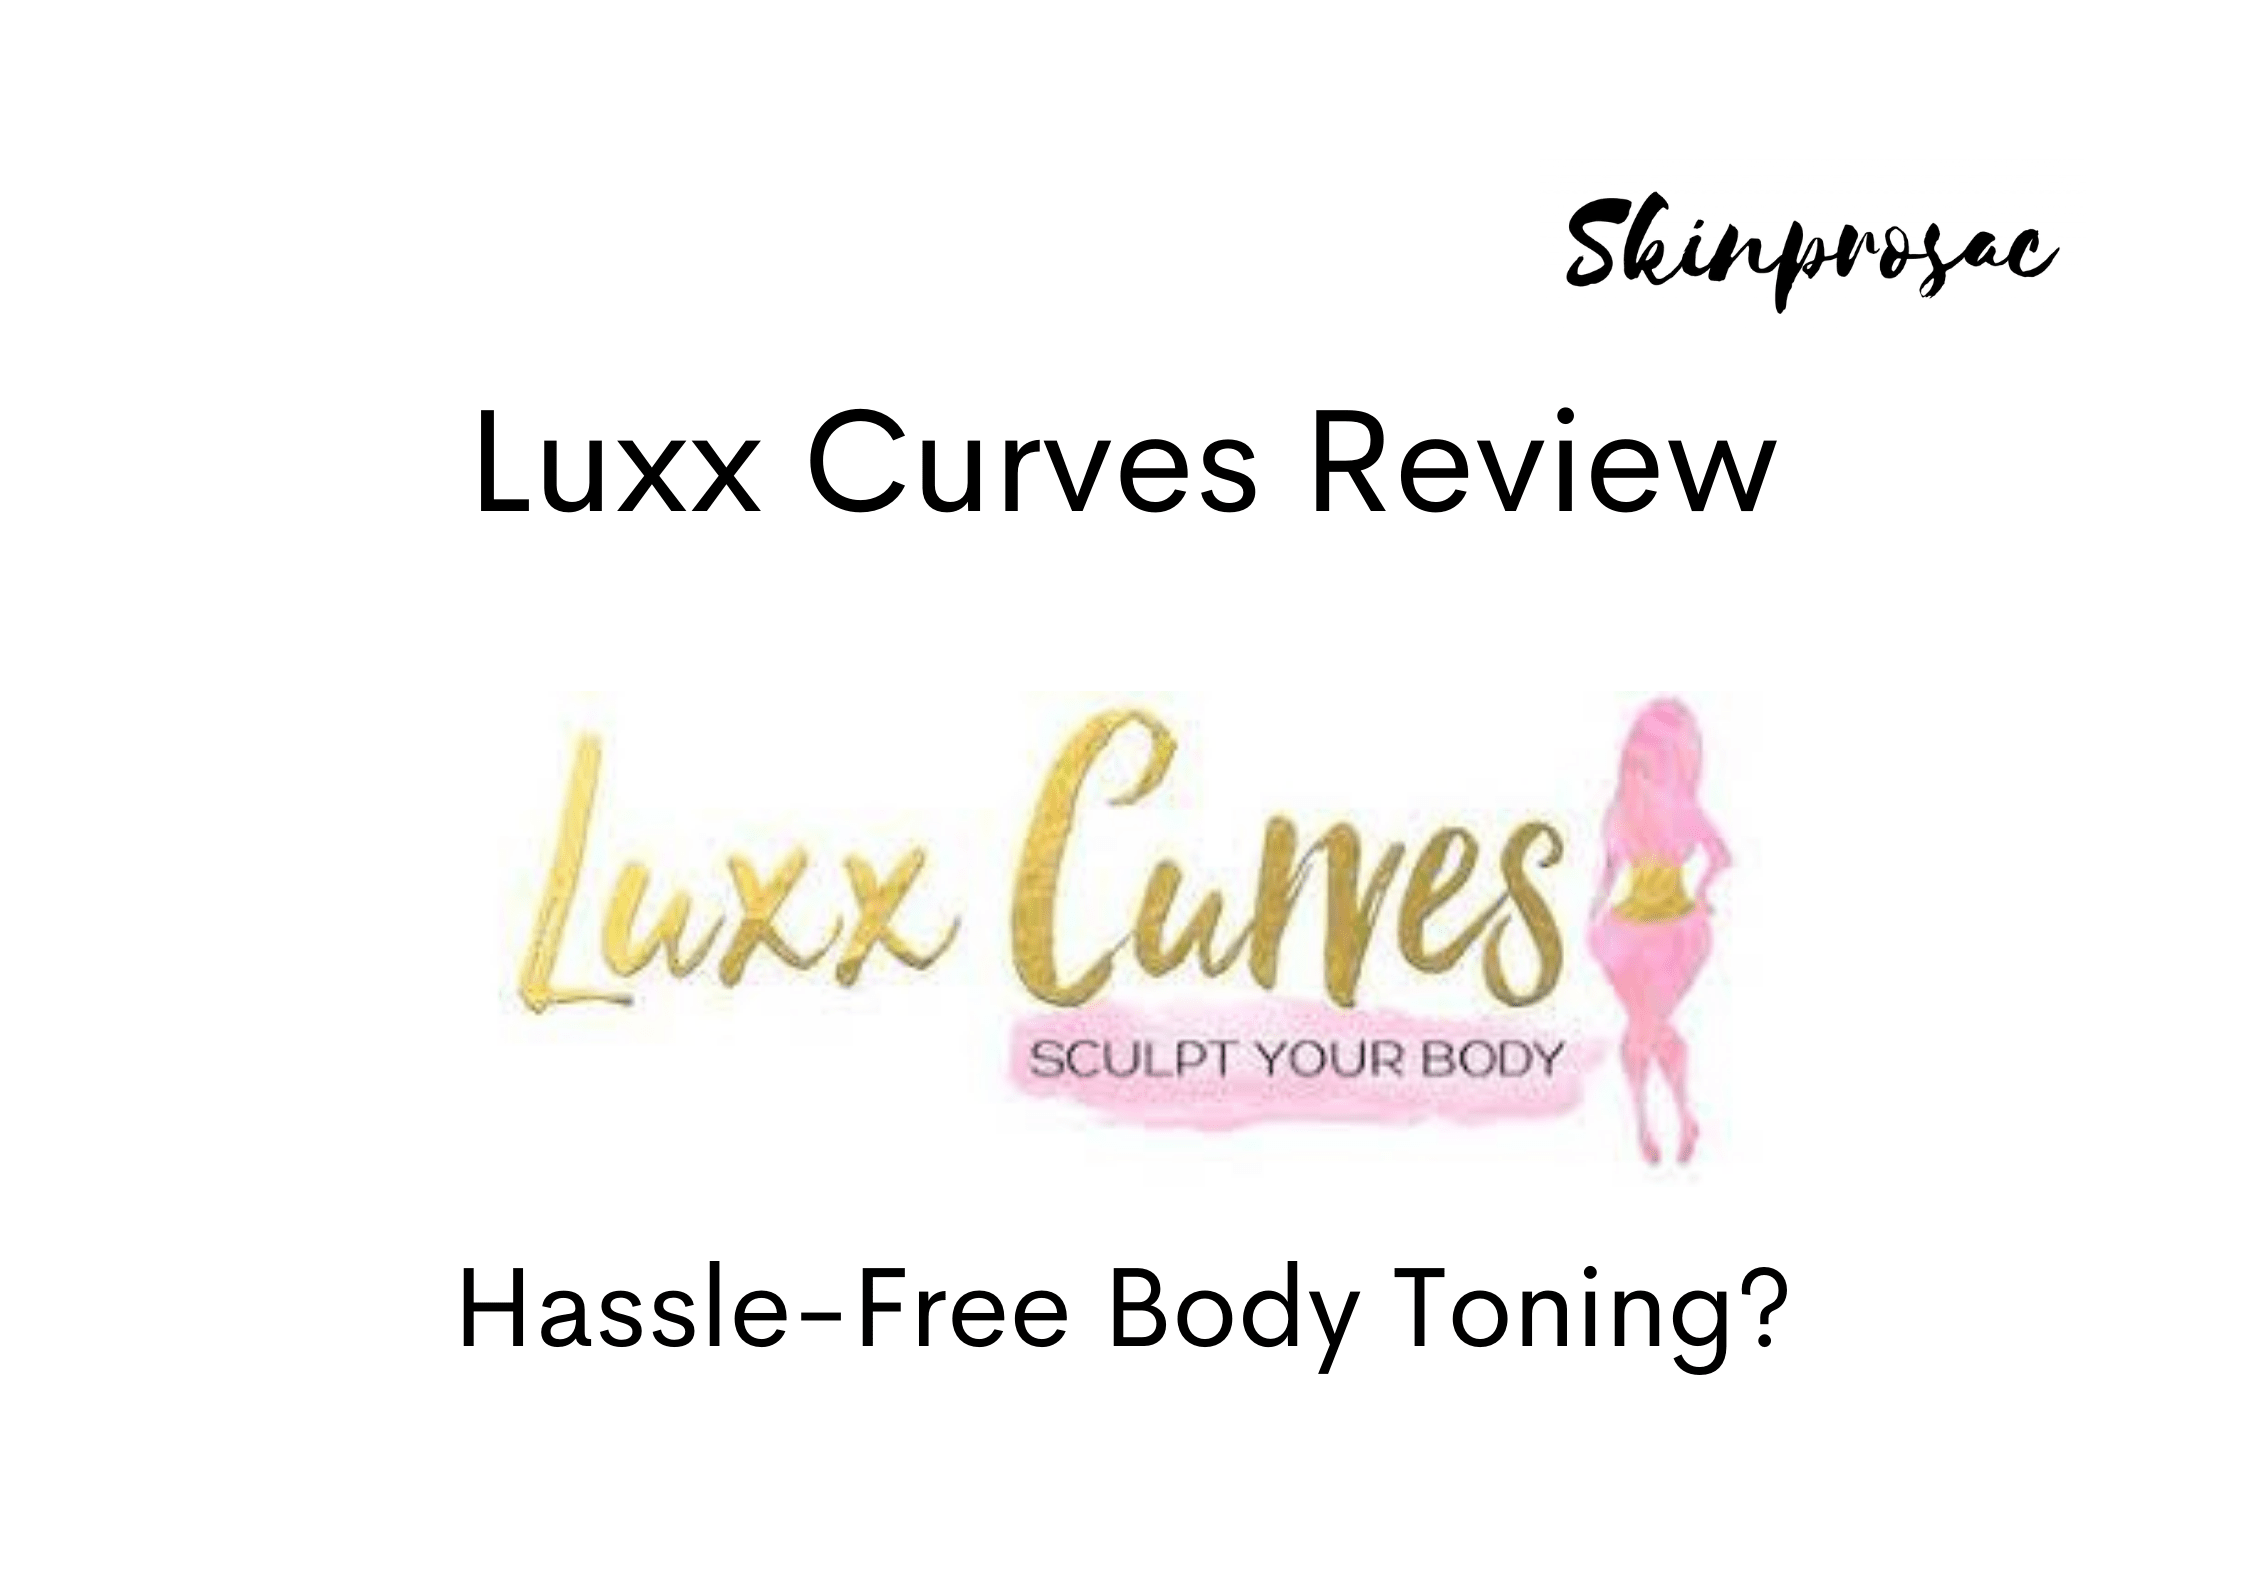 Luxx Curves Review